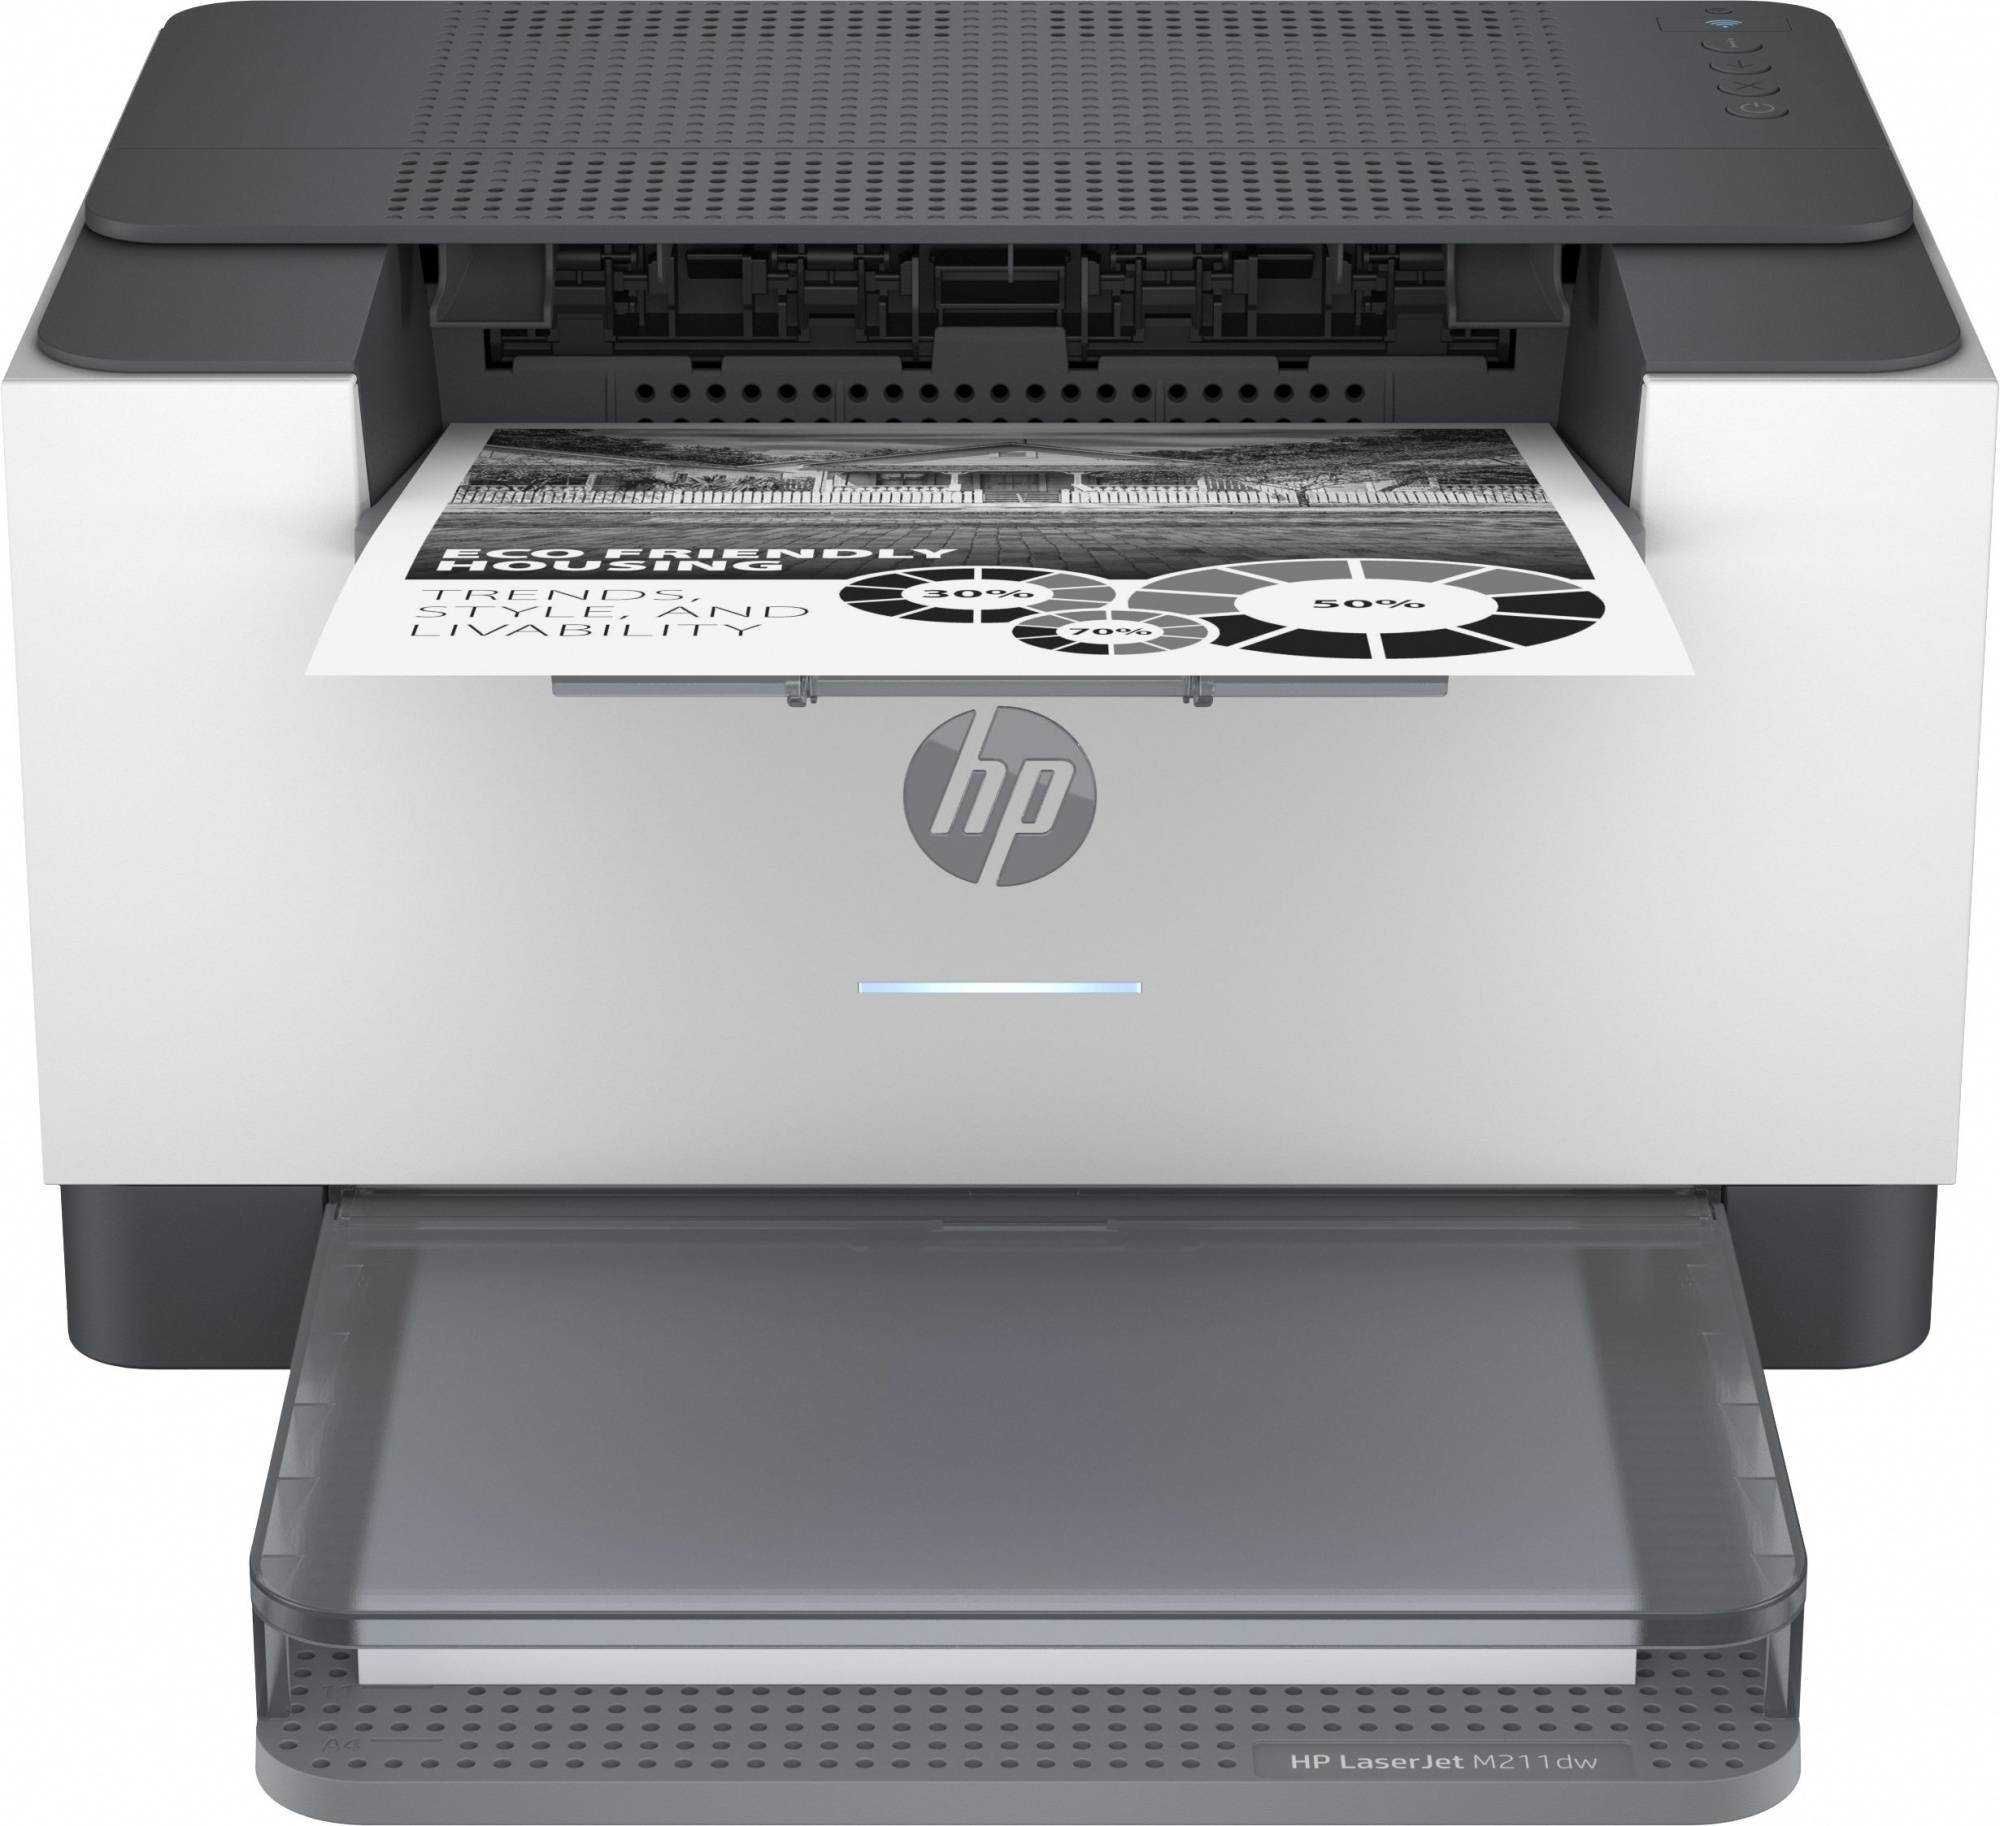 Принтер HP LaserJet M211dw белый/серый (9yf83a)